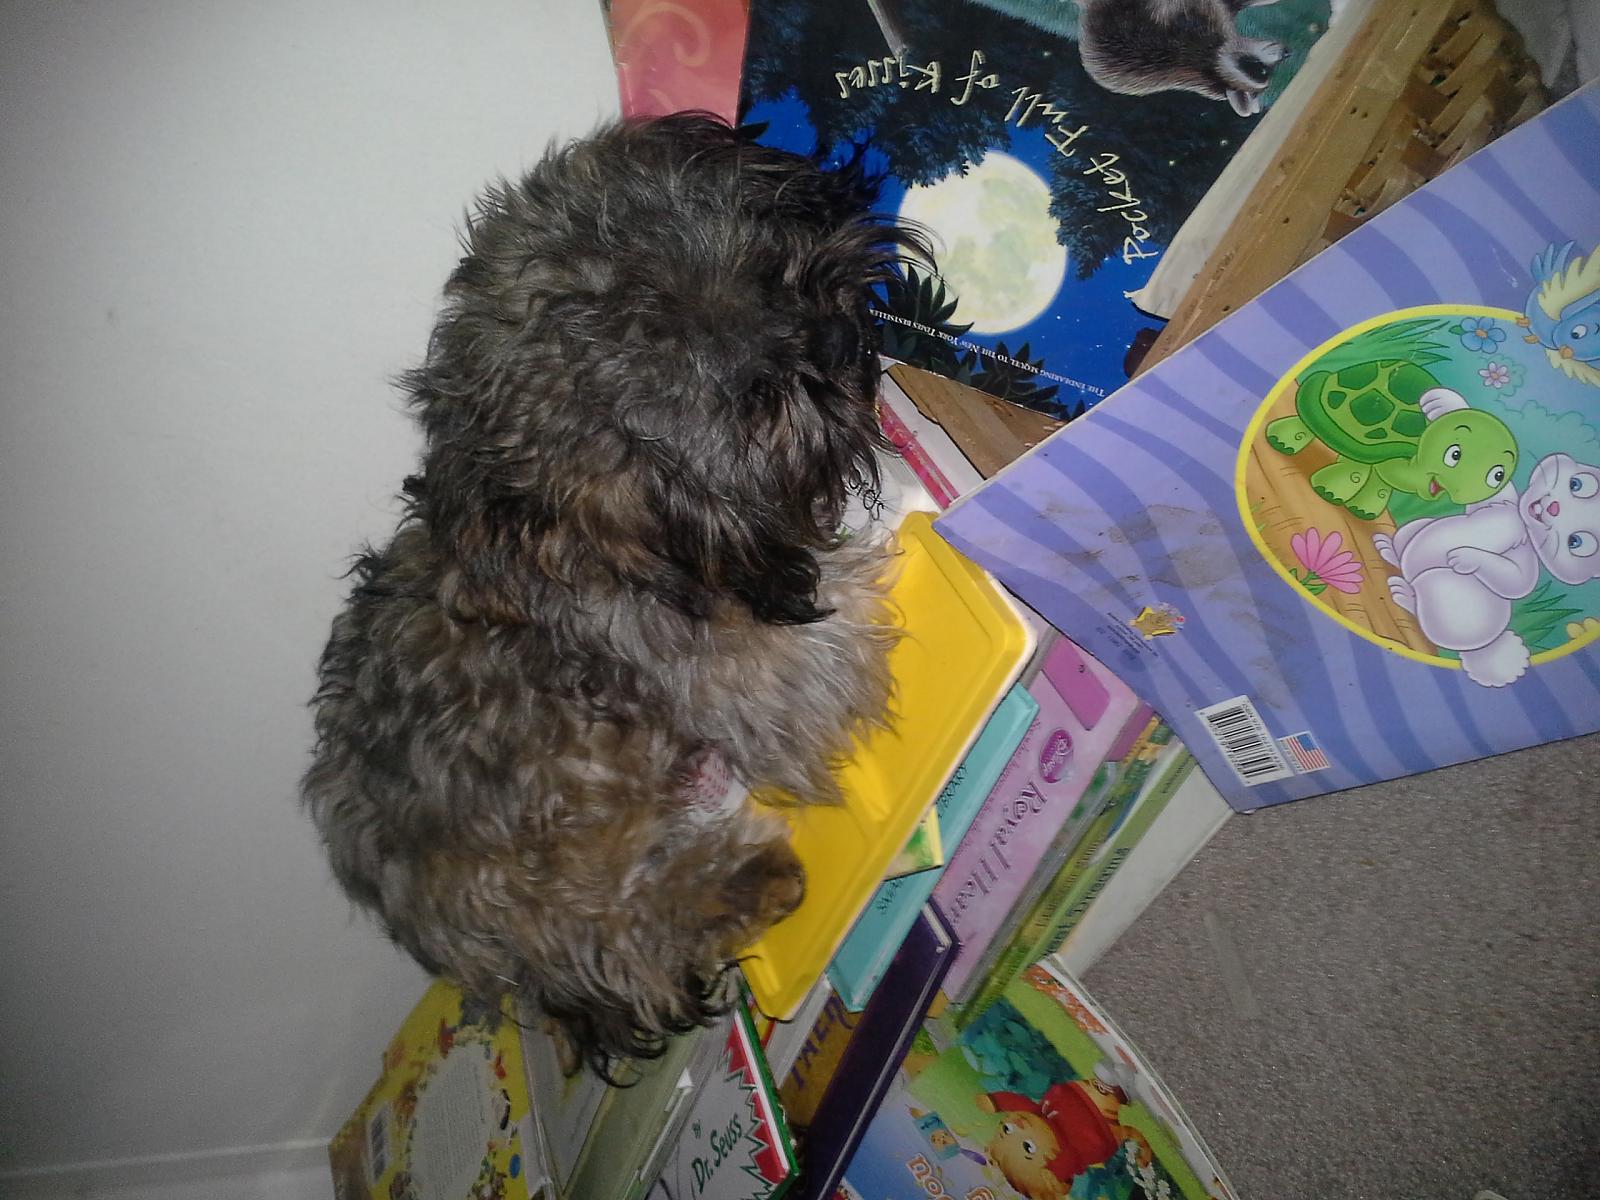 Teddy Man, snoozin' on some books.